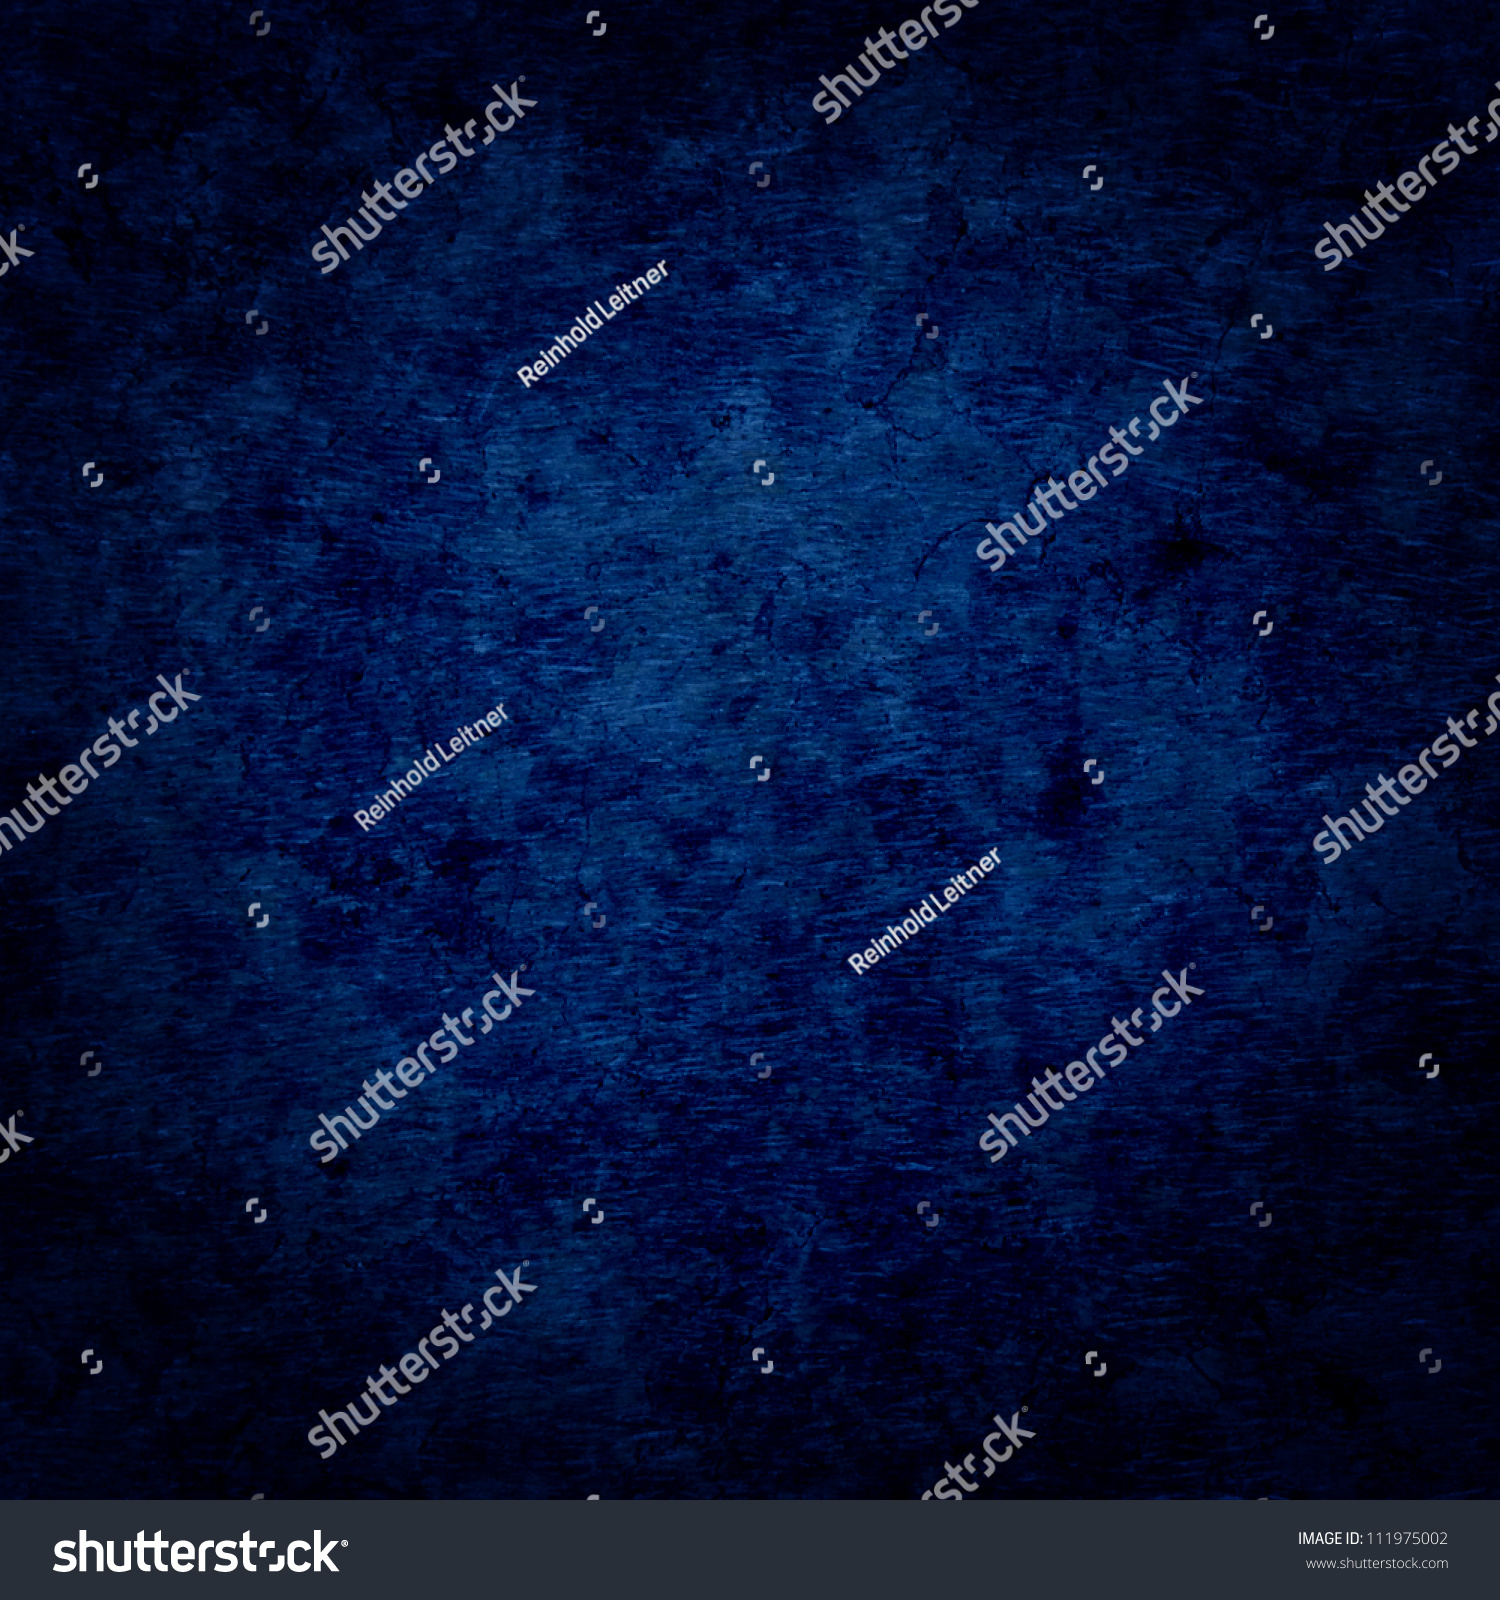 Grunge Background Wall In Blue Stock Photo 111975002 : Shutterstock